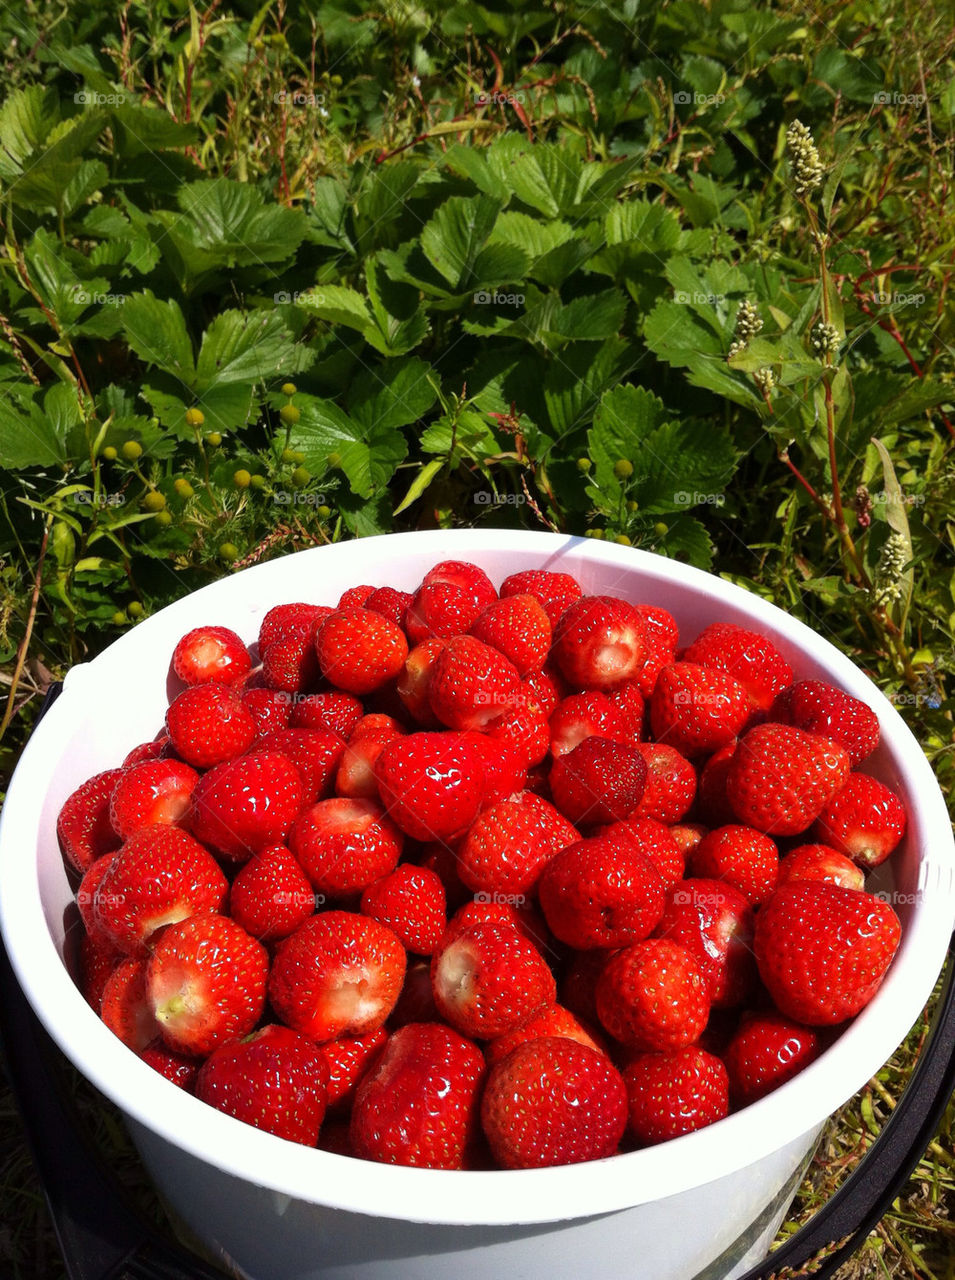 sweden field strawberry jordgubbar by vivid_photo